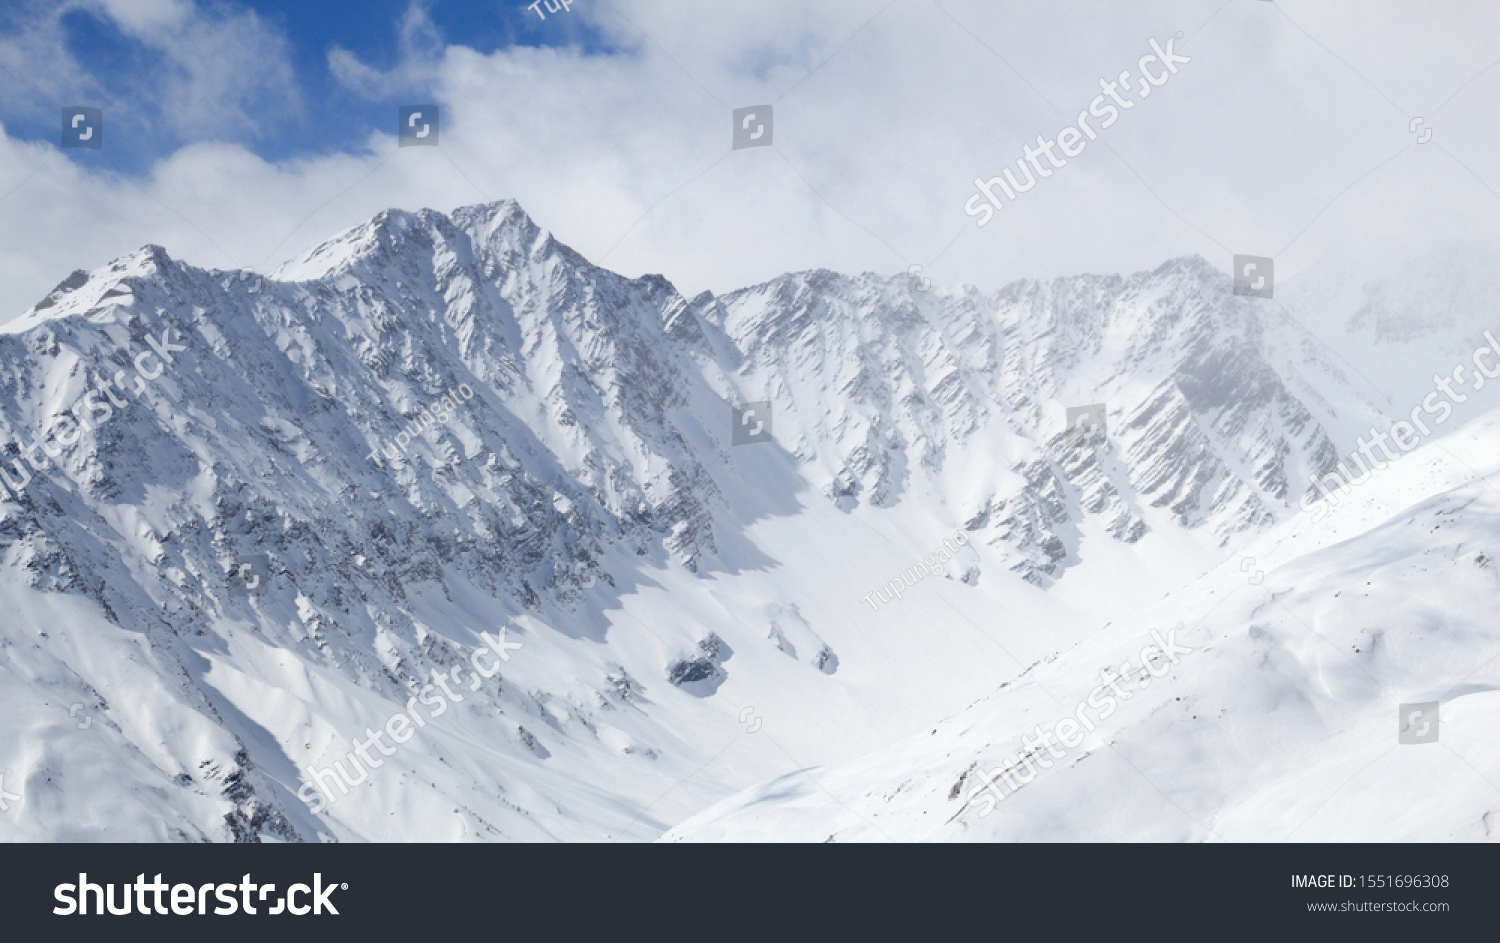 Winter Alps - Massif des Cerces mountain range in Rhone-Alpes region of France. European snow. #1551696308